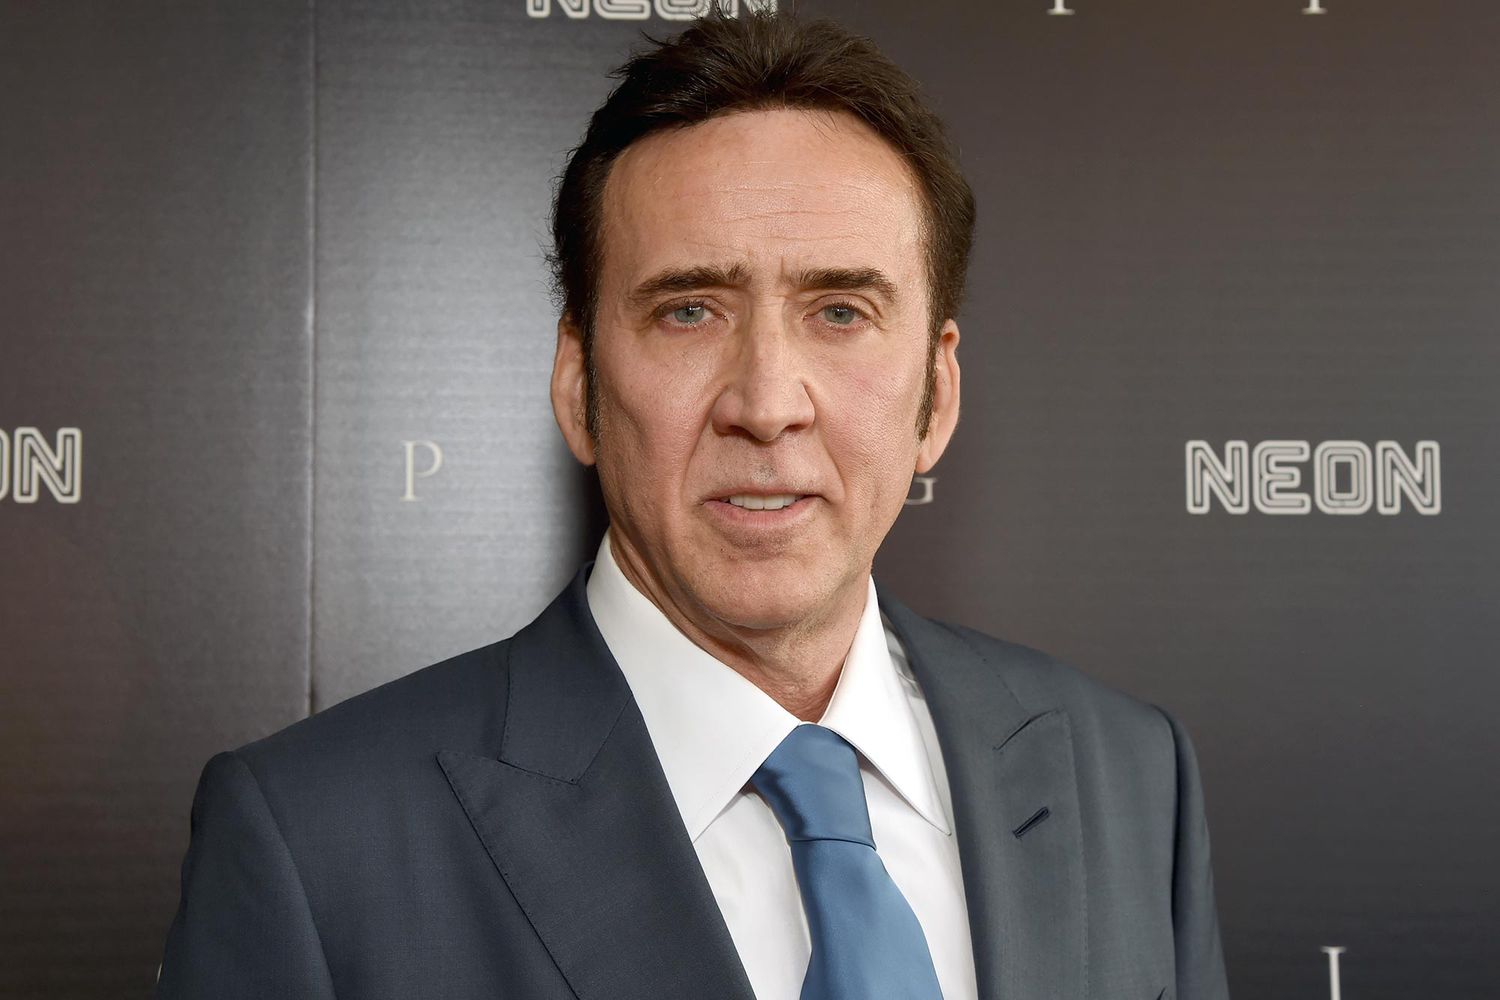 Nicolas Cage wearing a gray suit